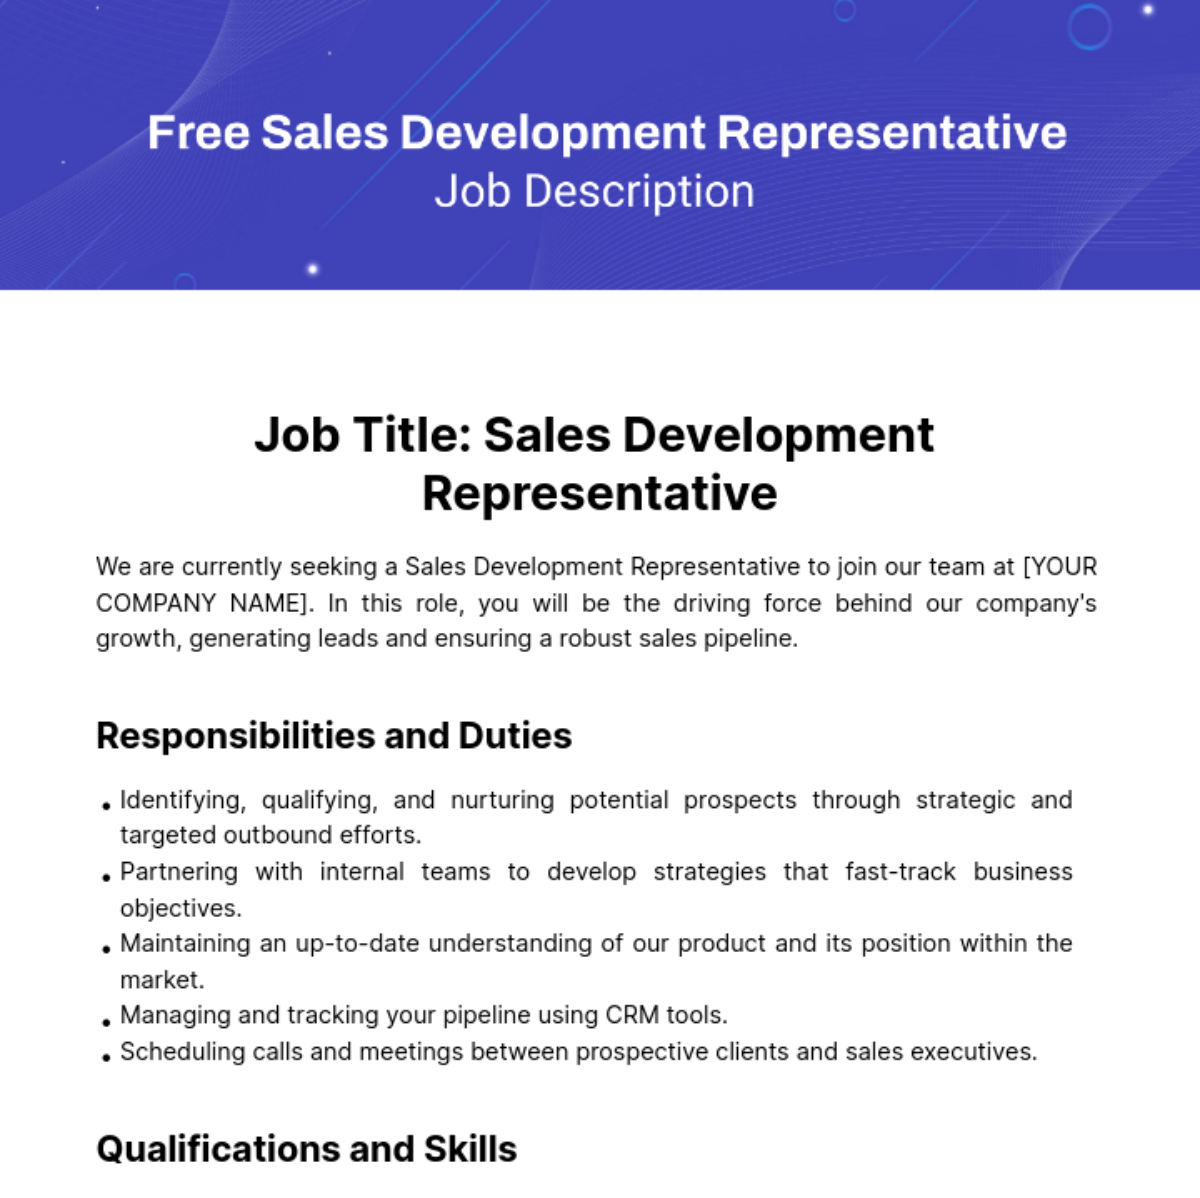 Free Sales Development Representative Job Description Template